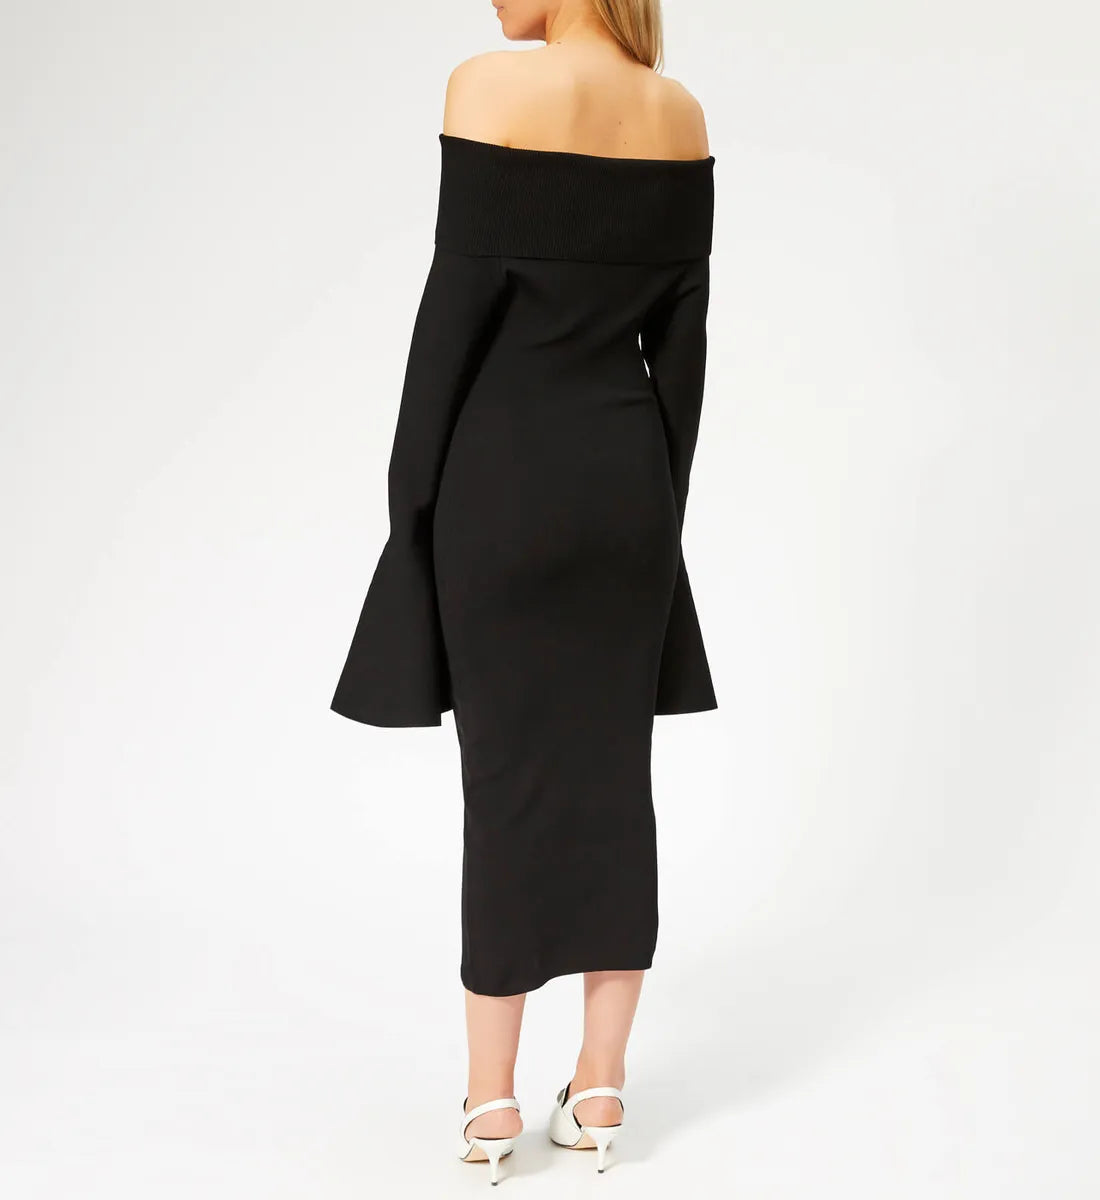 Solace Black Knit Off-Shoulder Dress-NWT